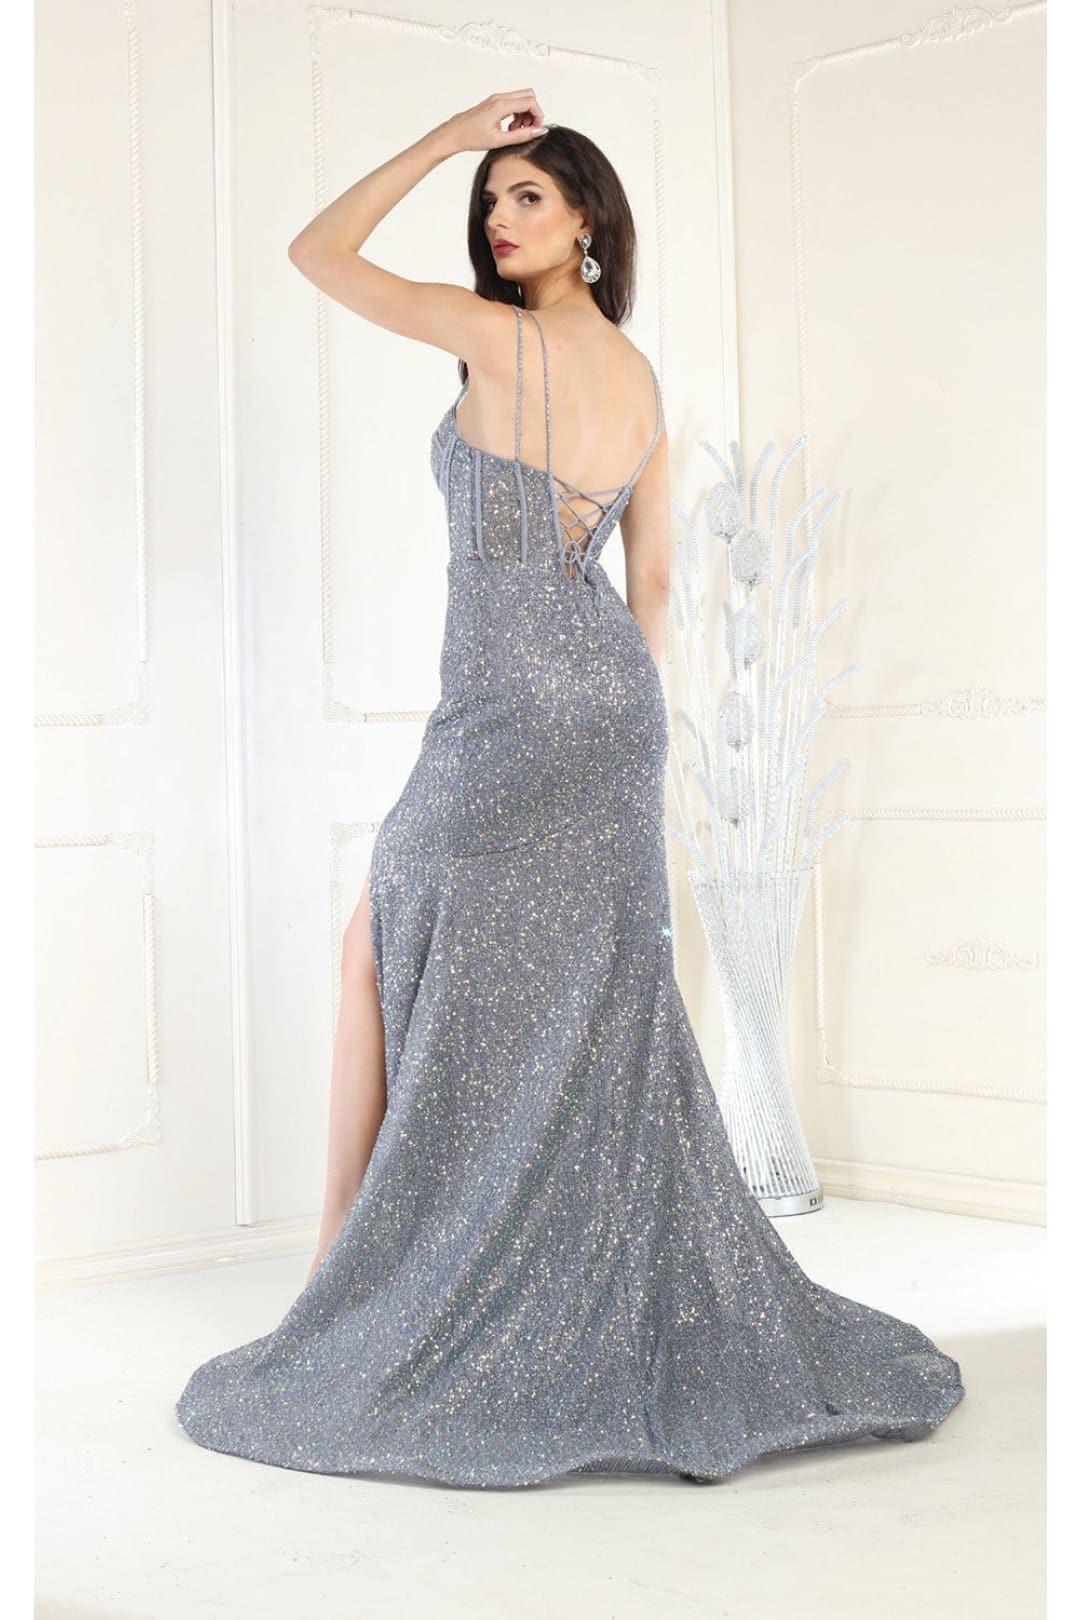 Royal Queen RQ7981 Sleeveless Glitter Prom Gown - Dress